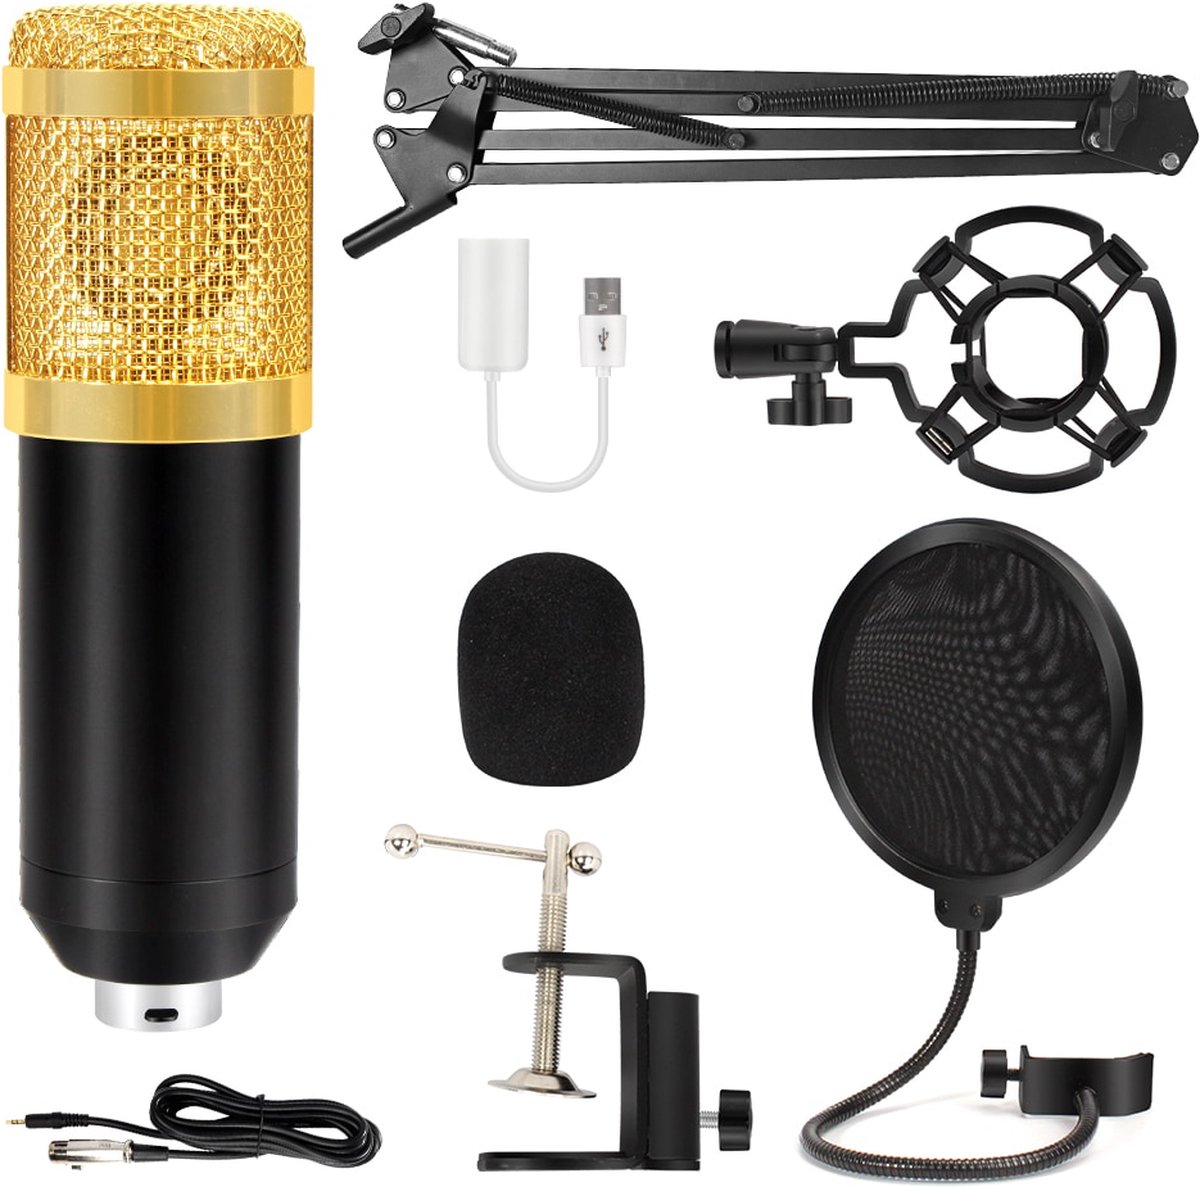 Brandie® - Microfoon - Condensatormicrofoon - Ruisonderdrukking - Helder Geluid - Ultrahoge gevoeligheid - Wijdverspreide toepassing - Professionele Opnameset - Voor Omroepzangopnames - Met USB-geluidskaart - Zwart en Goud